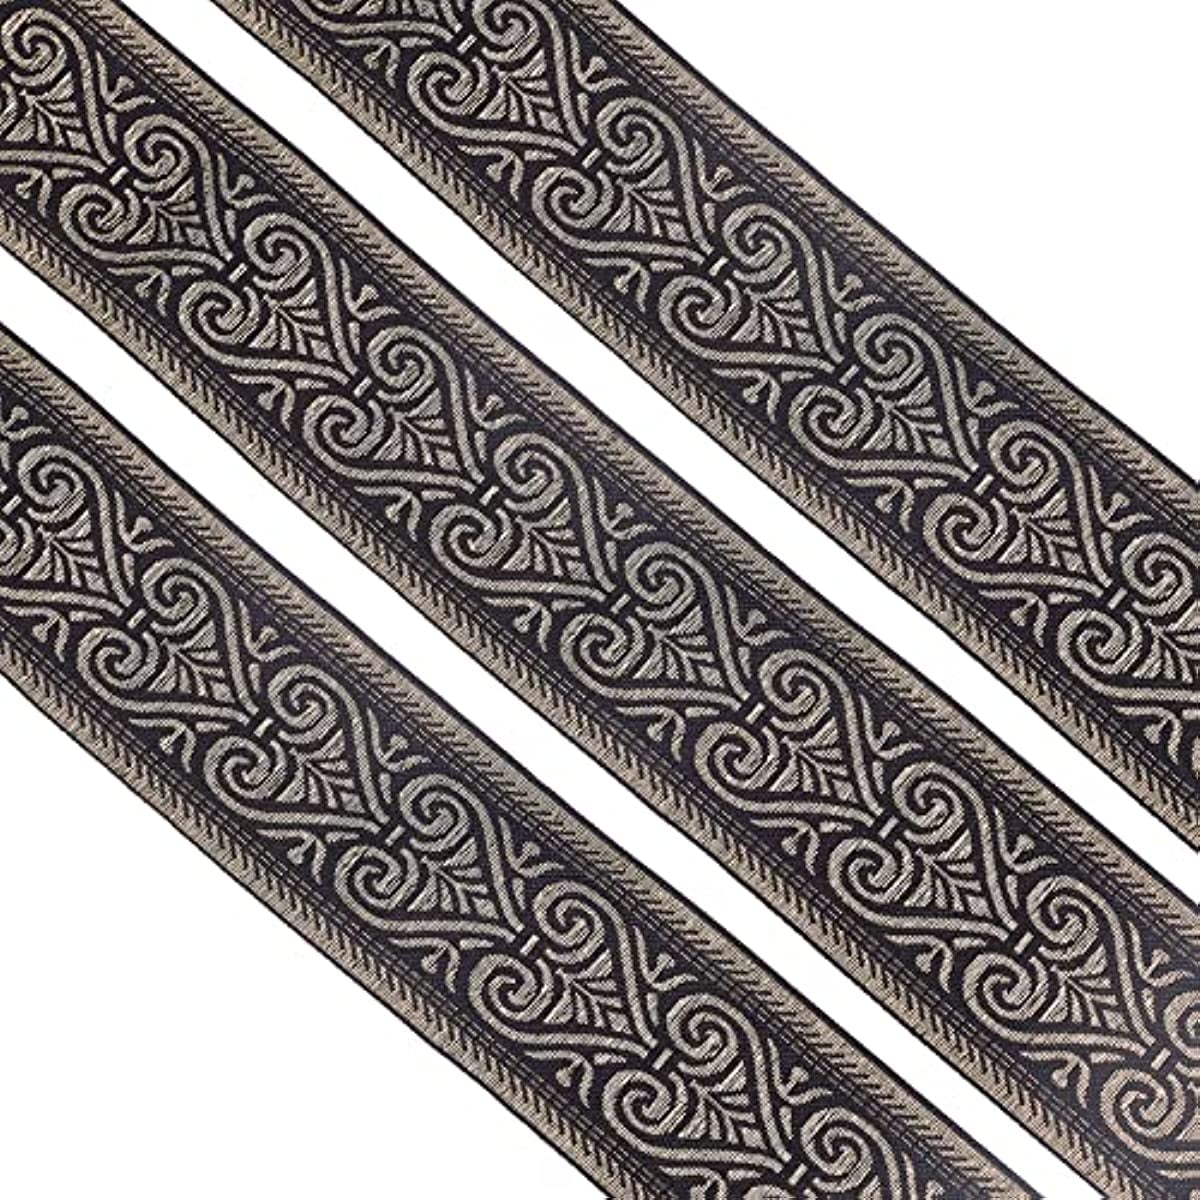 Ribbon #3 Sheer Black Iridescent Harmony 113 50 Yd